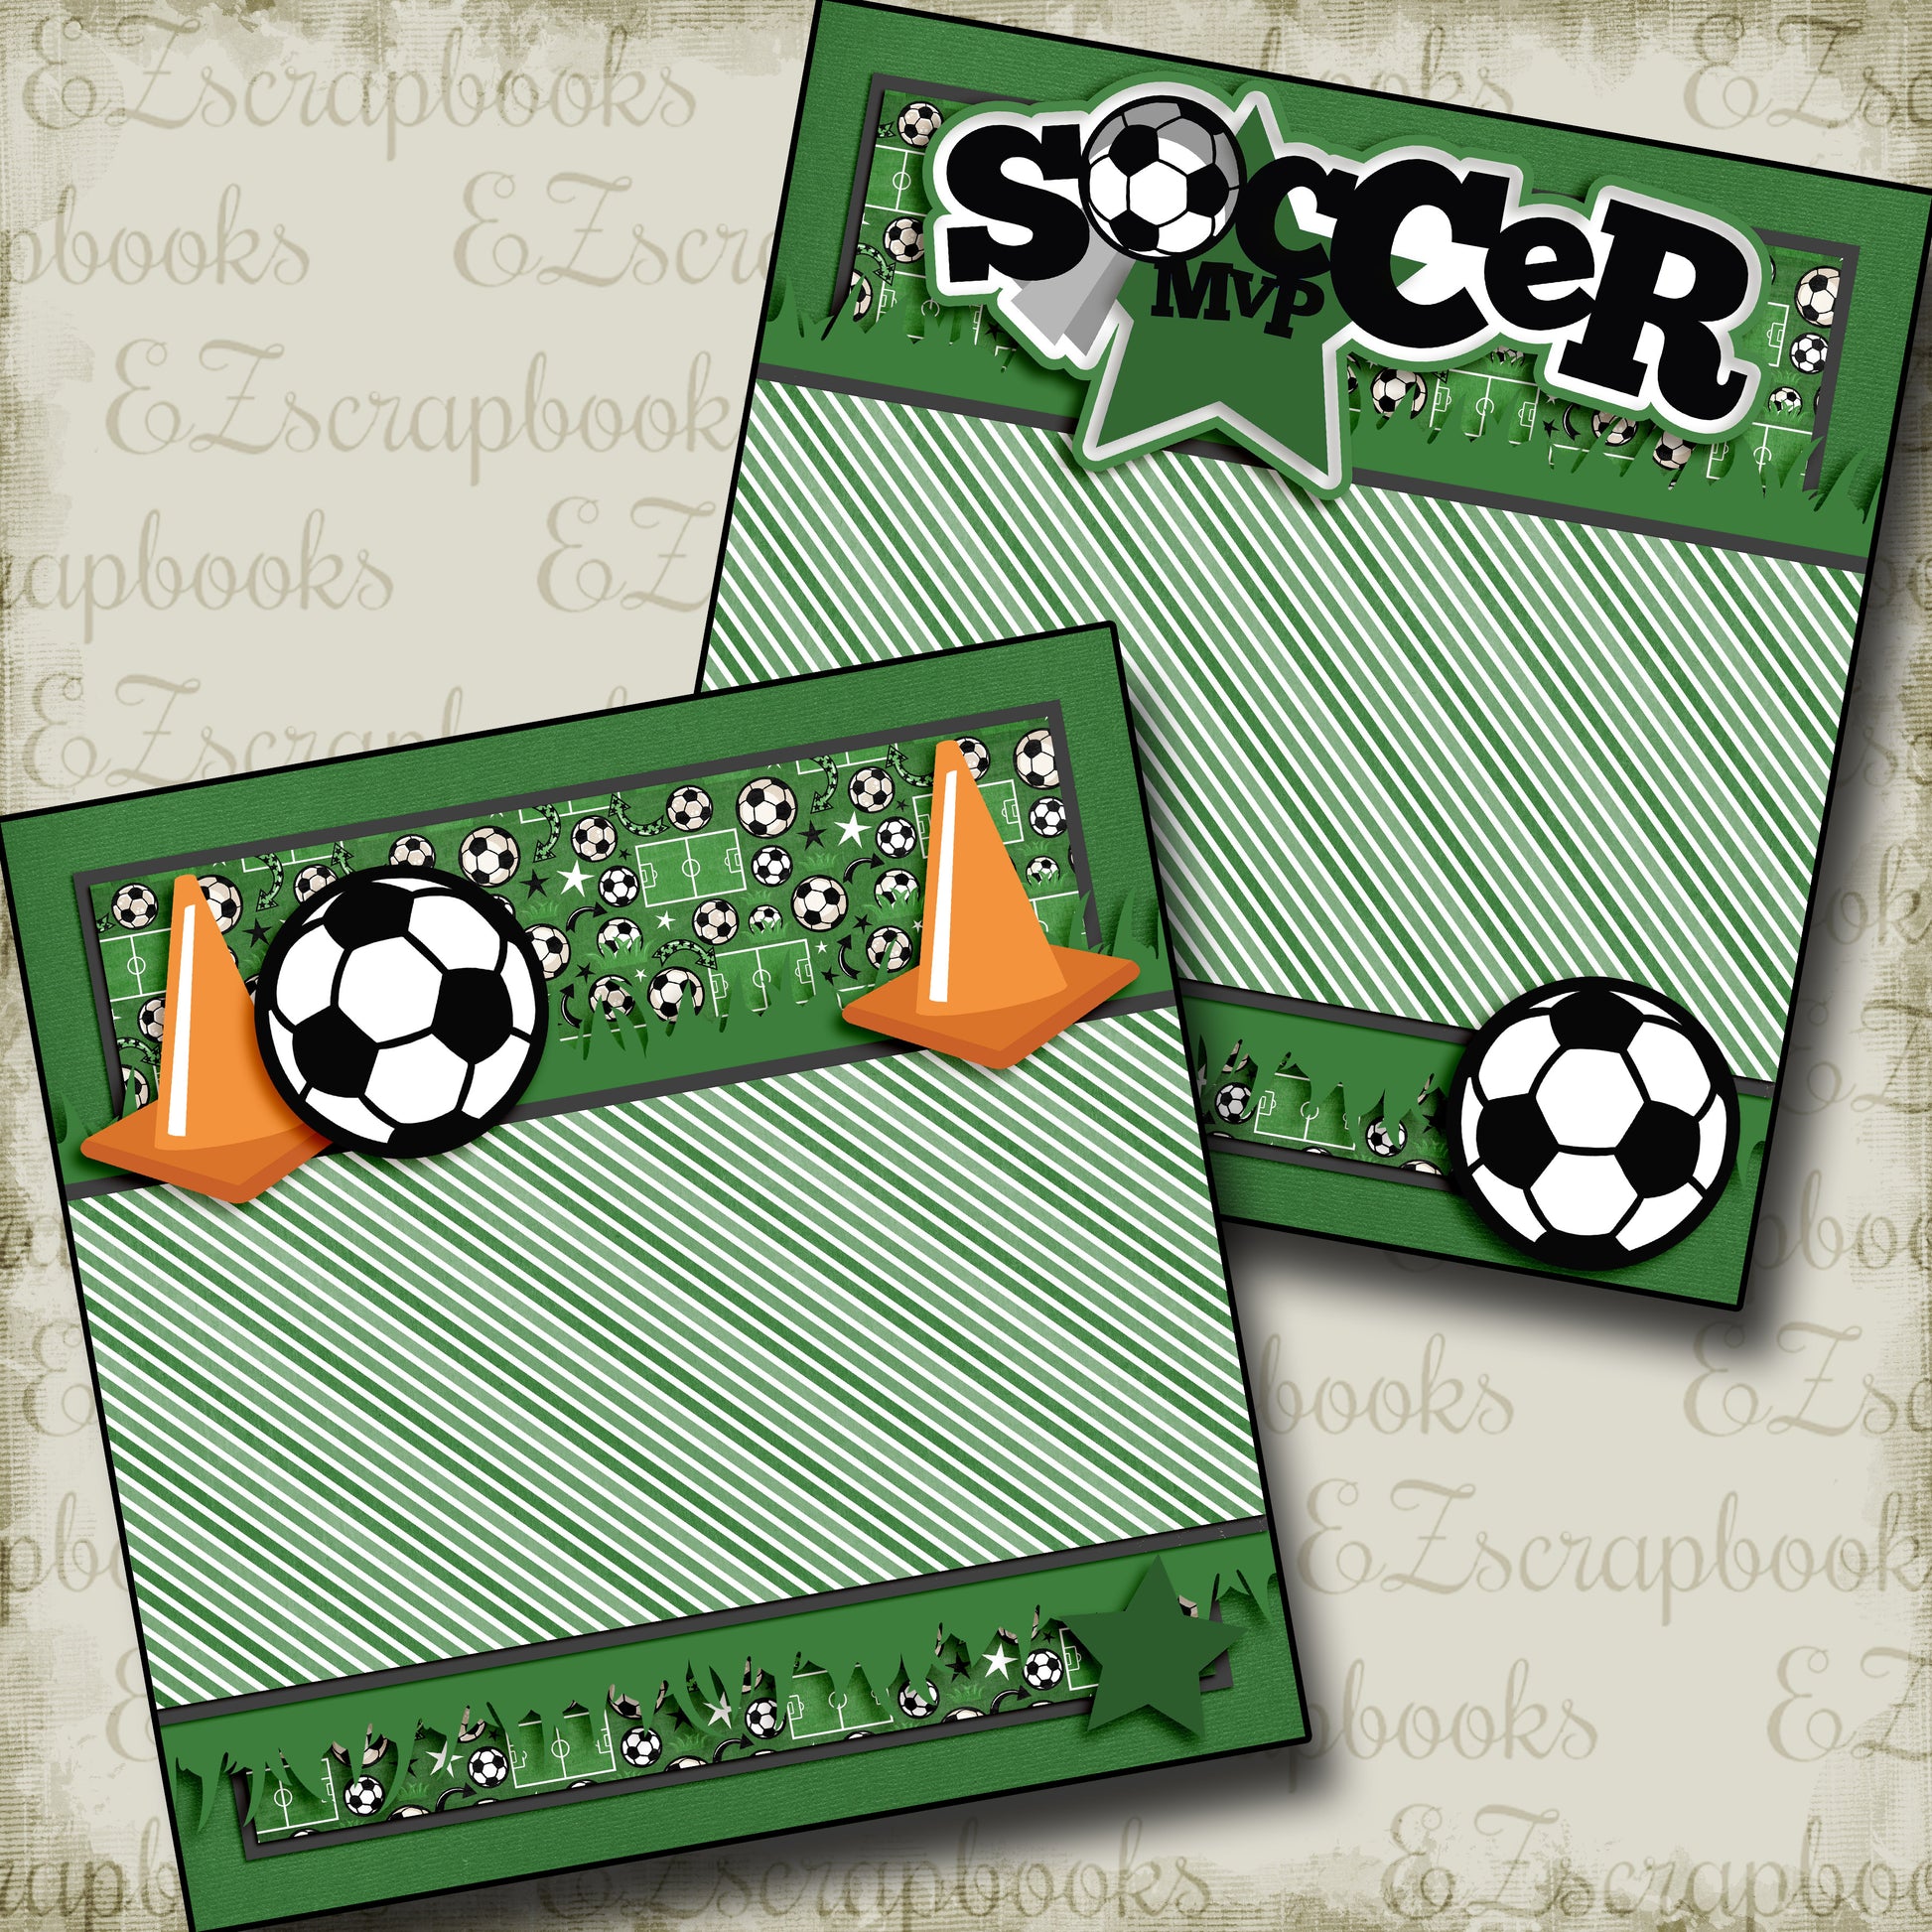 Soccer MVP Green NPM - 3311 - EZscrapbooks Scrapbook Layouts soccer, Sports